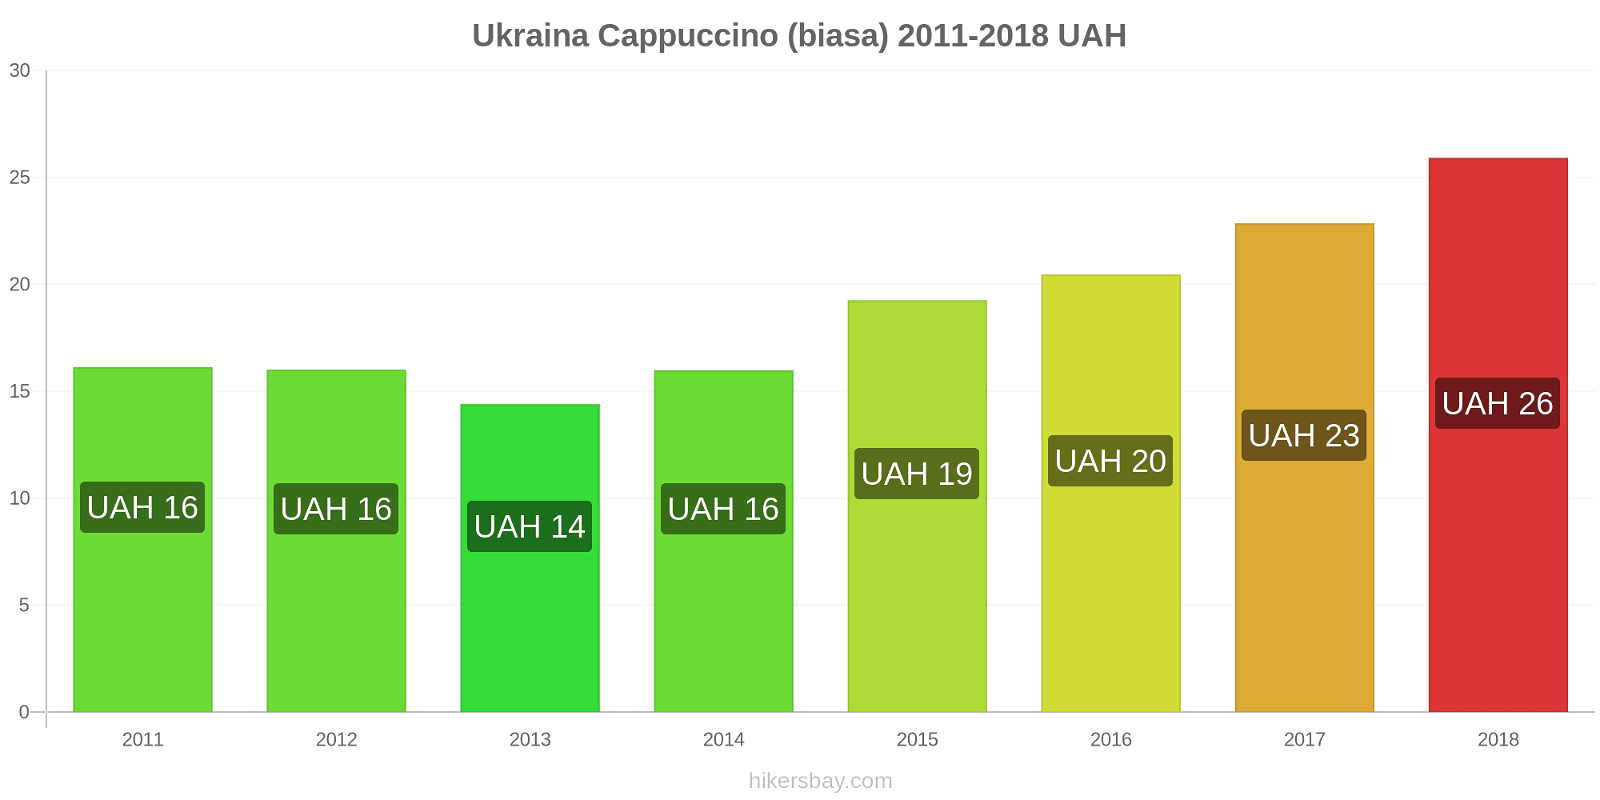 Ukraina perubahan harga Cappuccino hikersbay.com